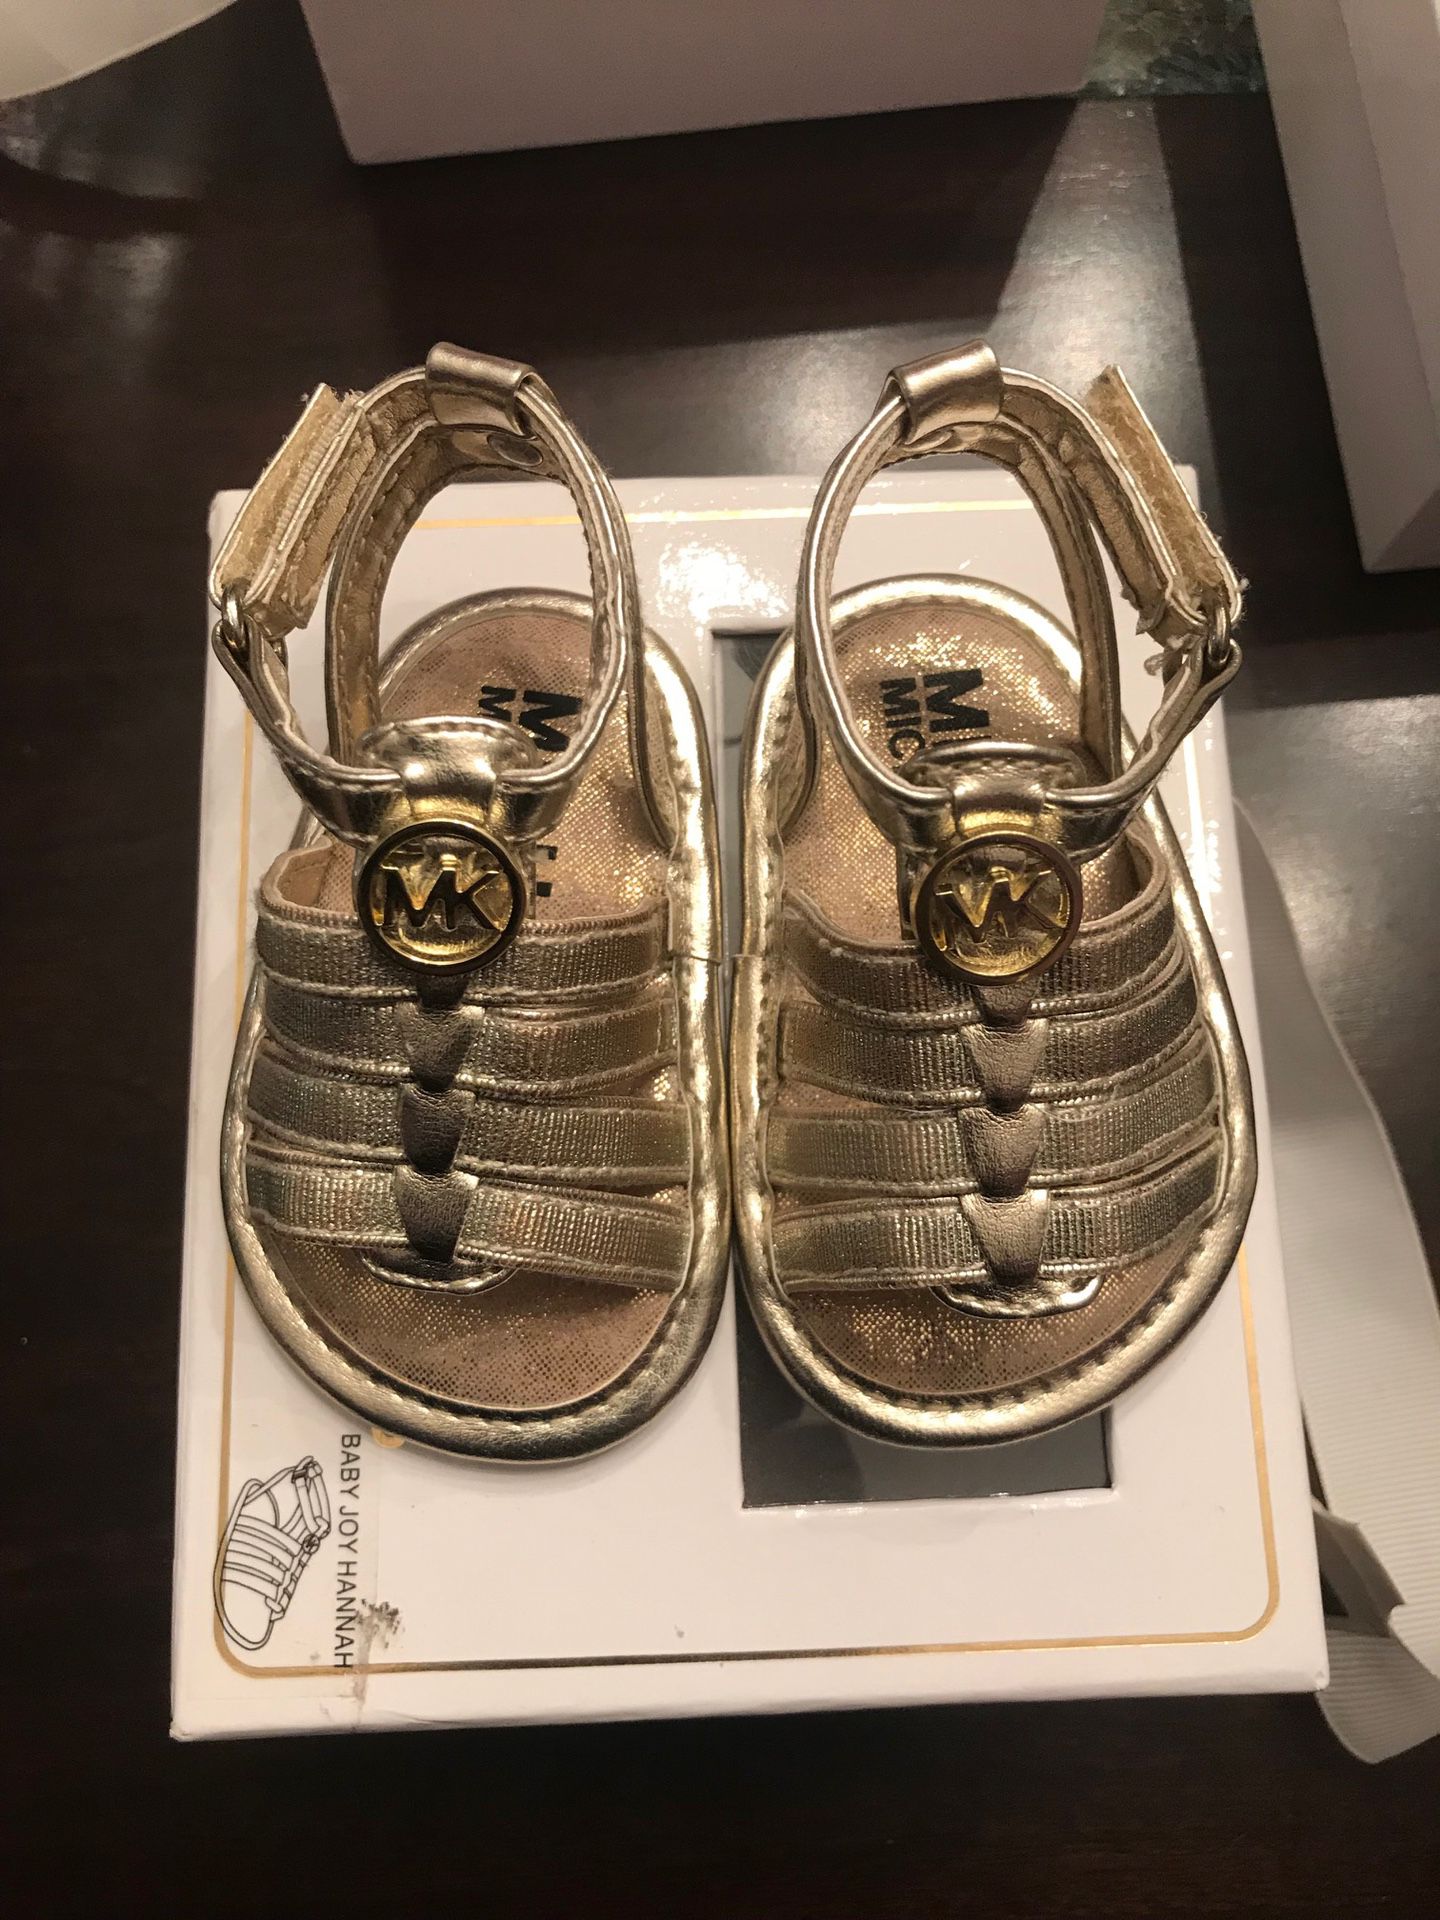 2 Pairs of Michael Kors Kids Shoes